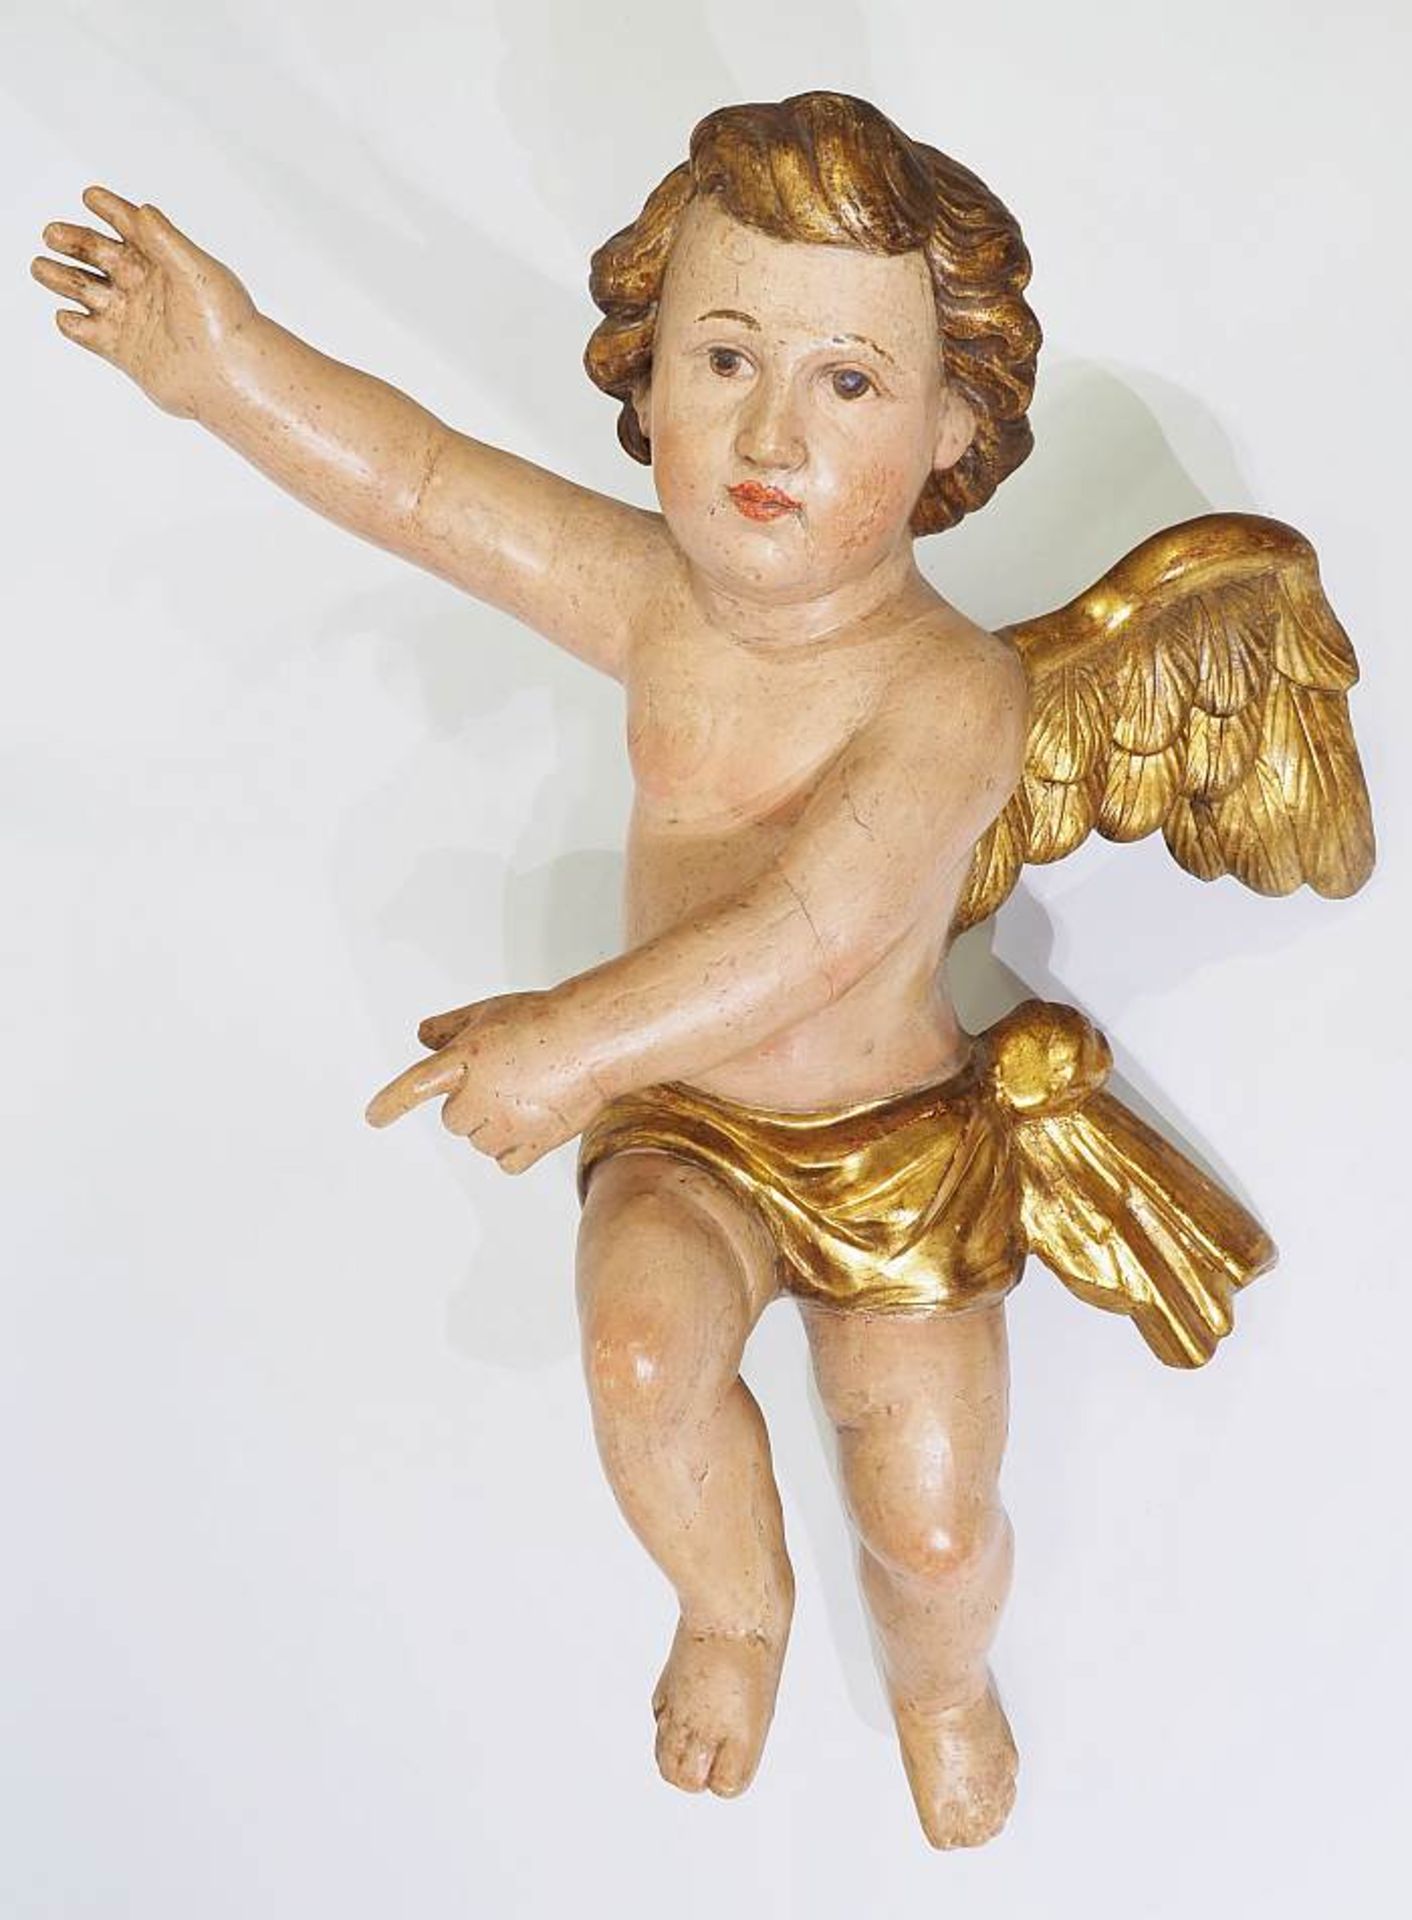 Schwebender Barock-Engel.Schwebender Barock-Engel. 20. Jahrhundert. Holz, farbig gefasst, partiell